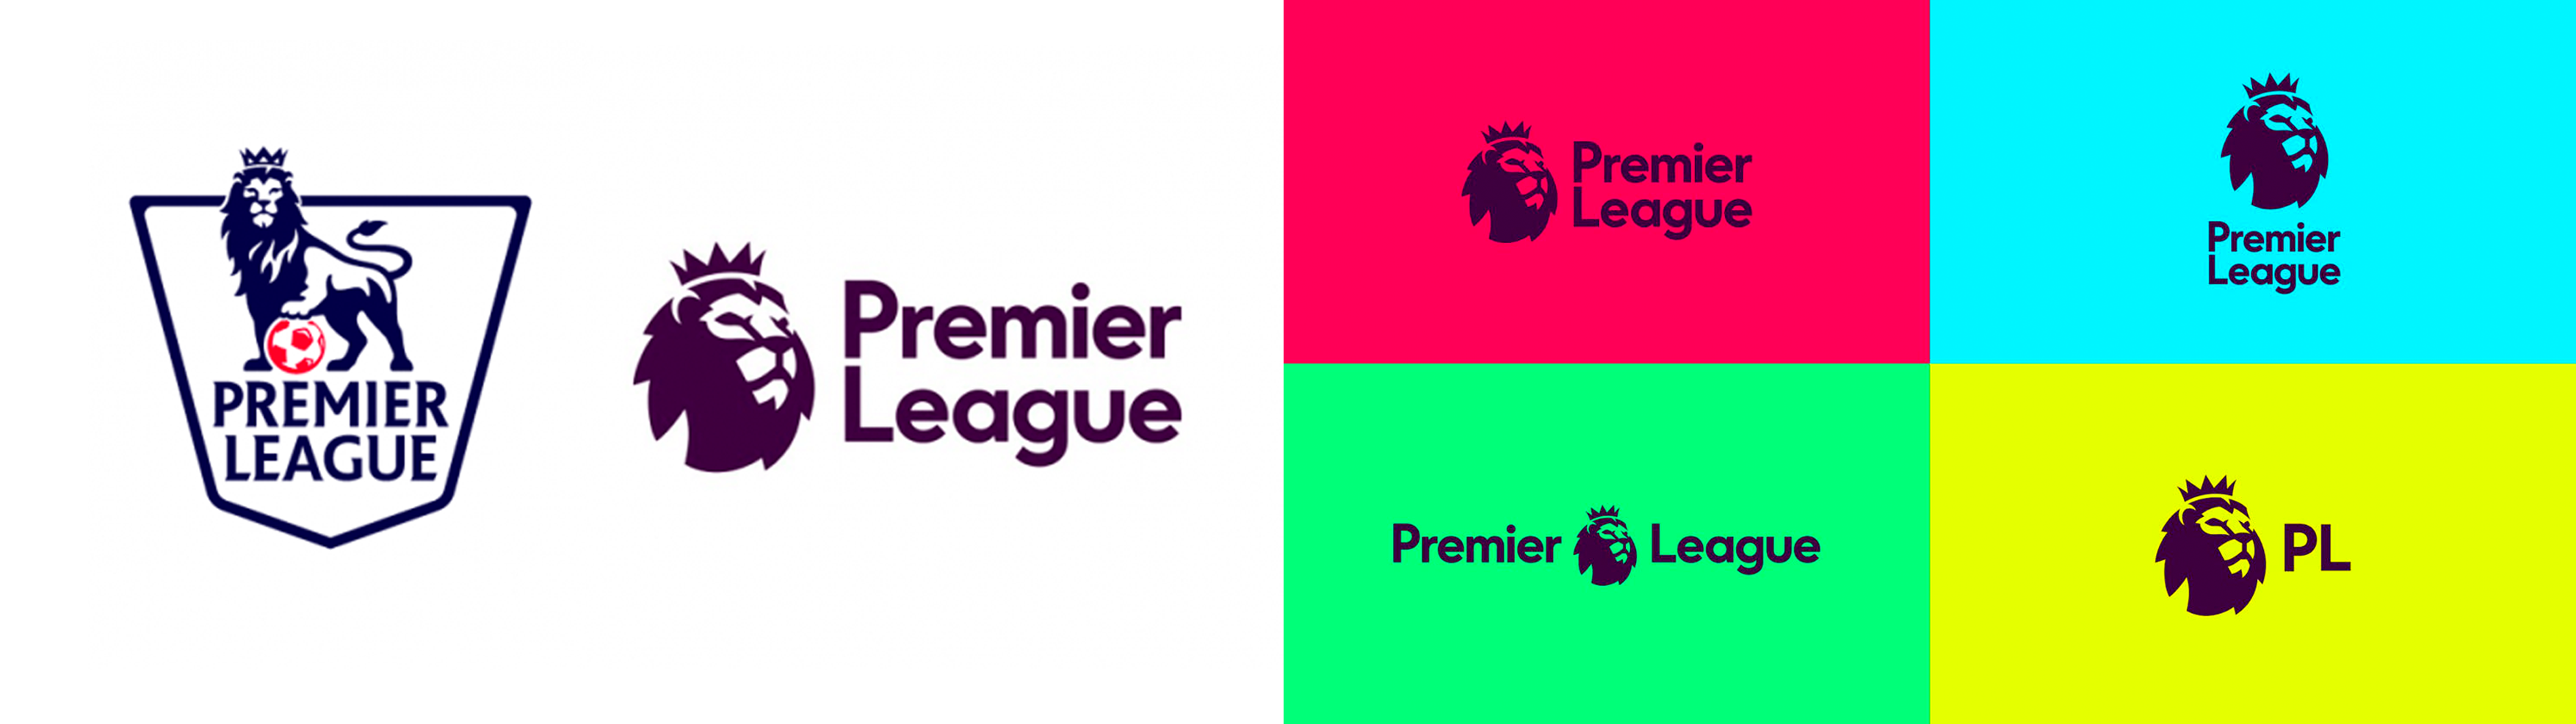 premier league rebrand branding logo update colours geometric 